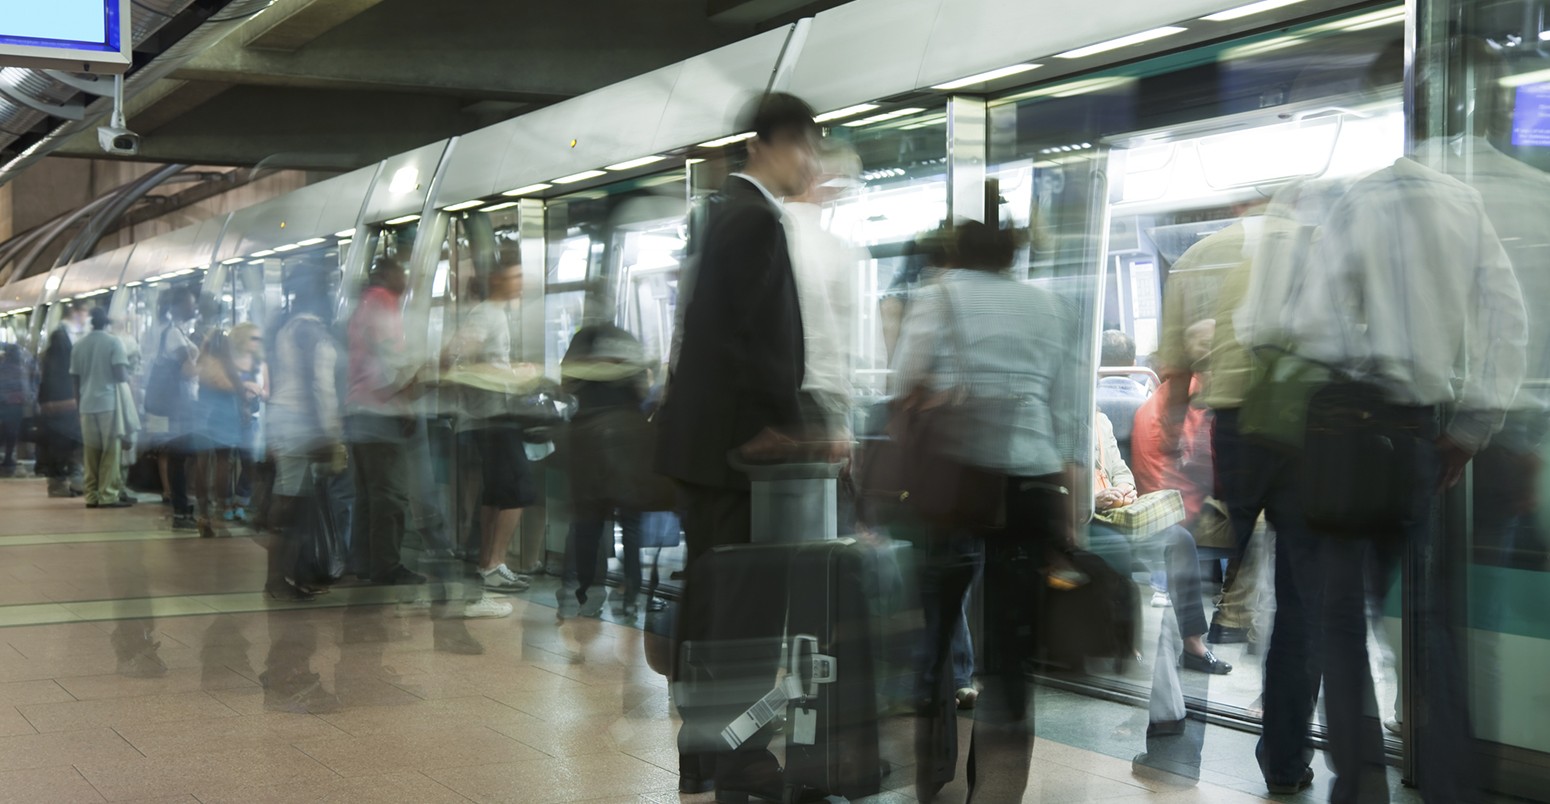 Blurred passengers waiting in underground station, long exposure.